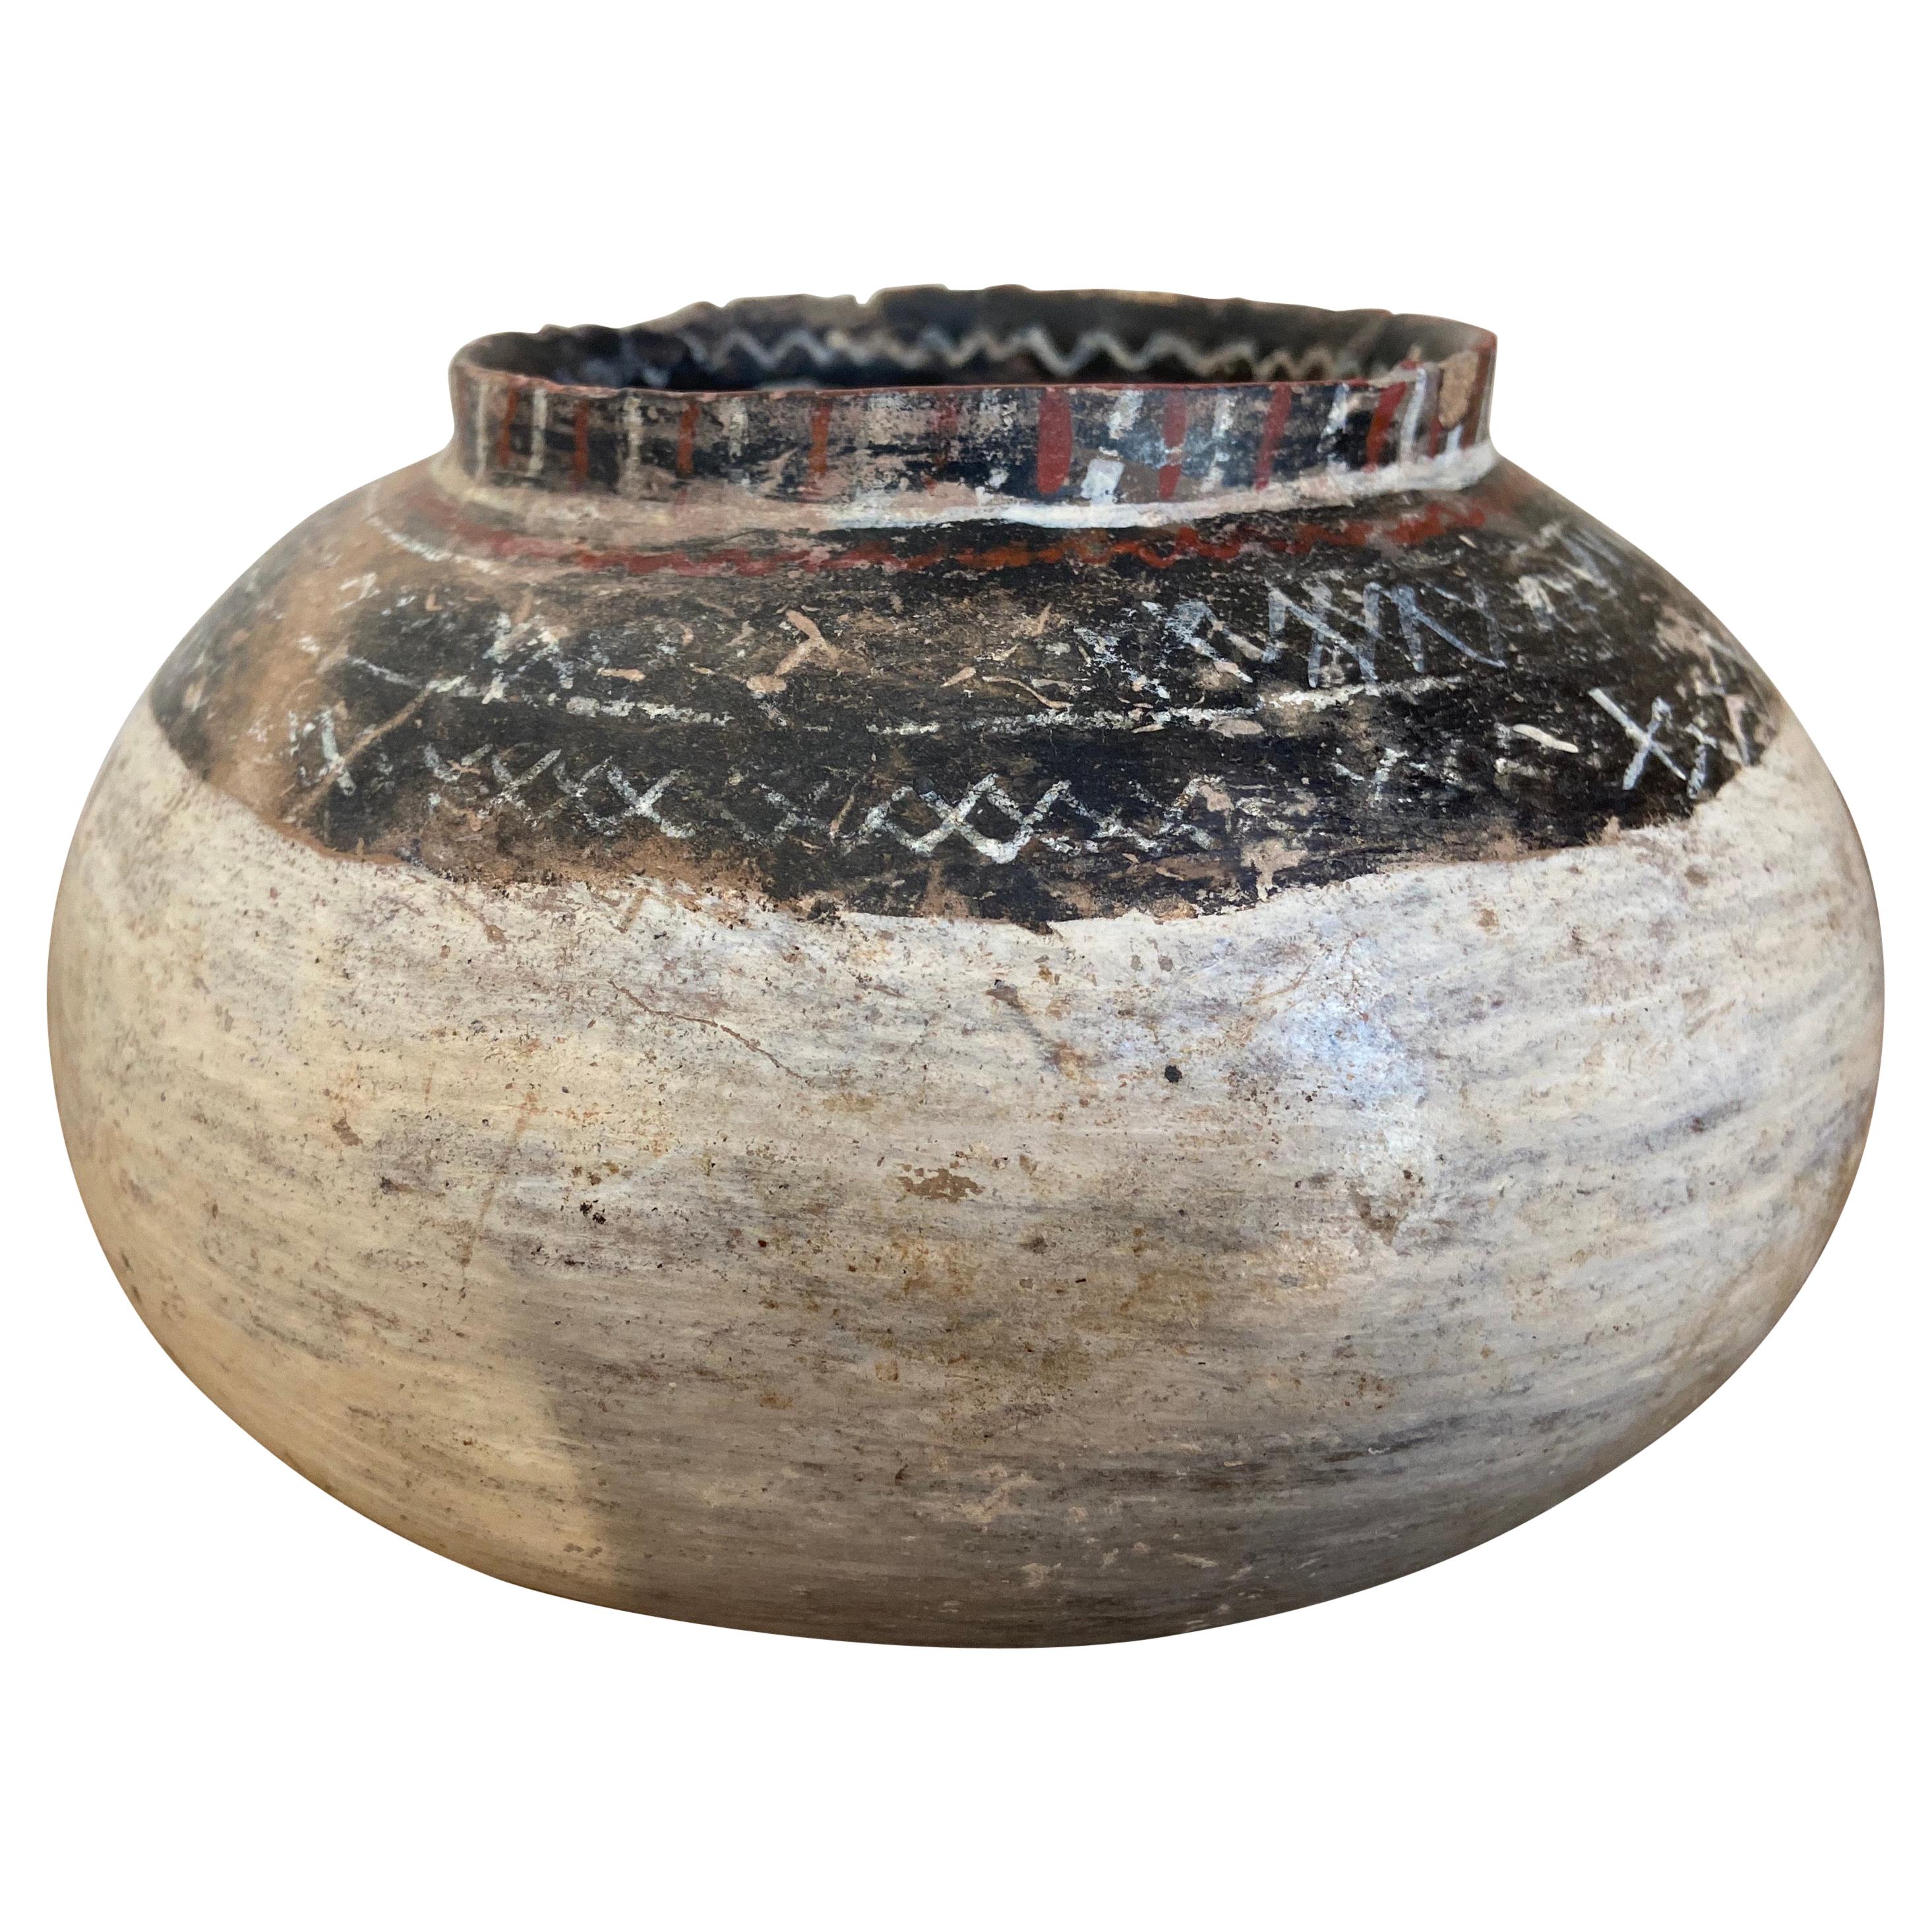 Pre-Columbian Ceramic Vessel from Mexico